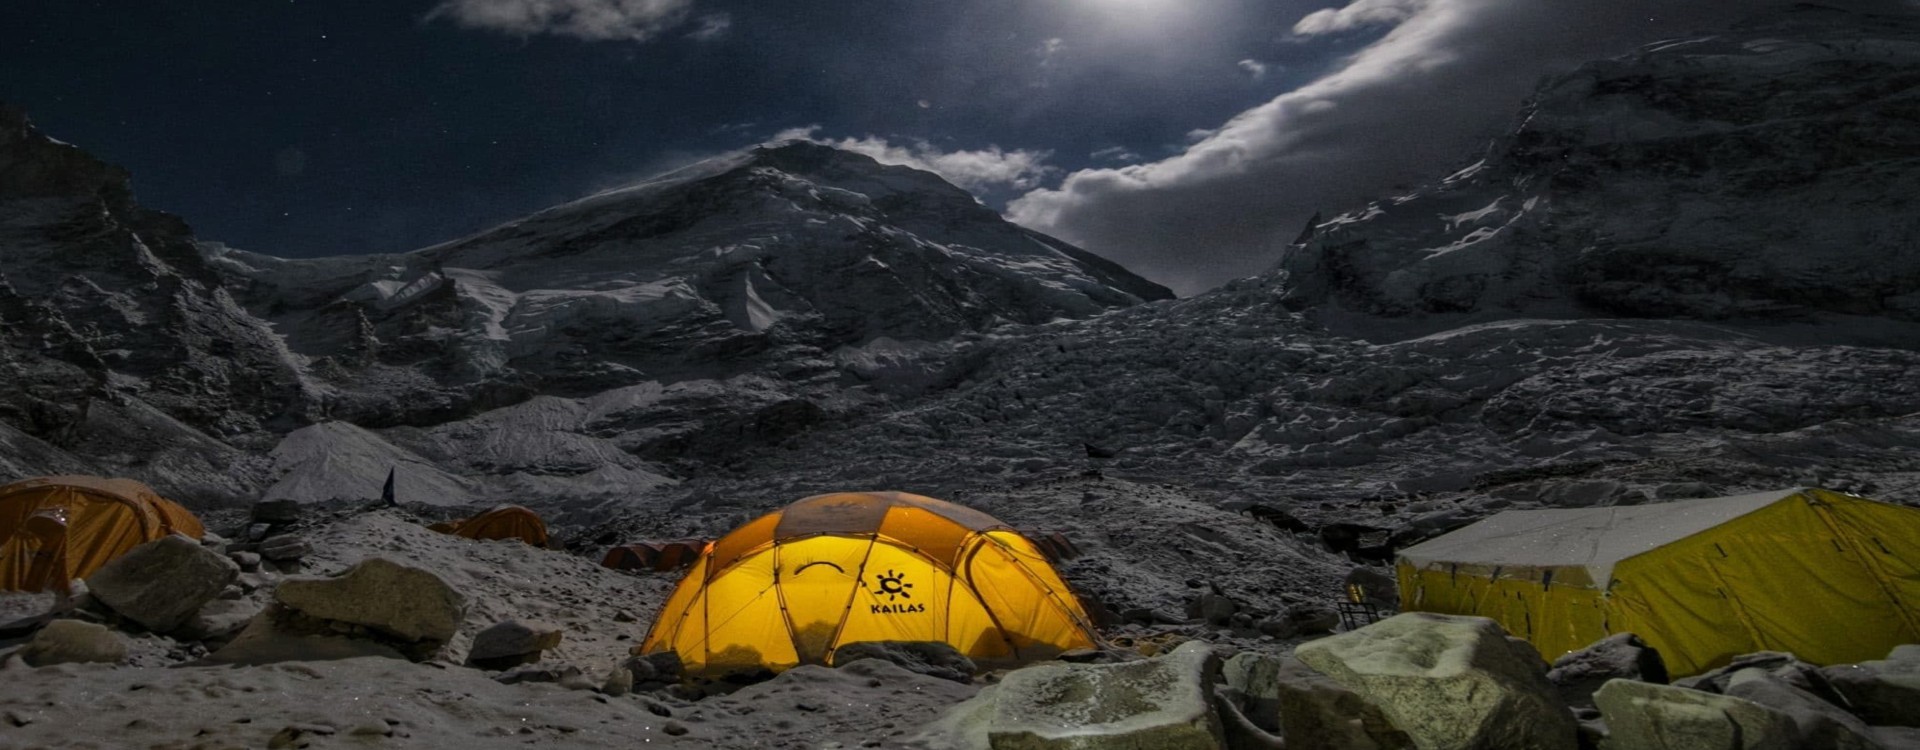 Everest Base Camp Trek with Overnight at Base Camp